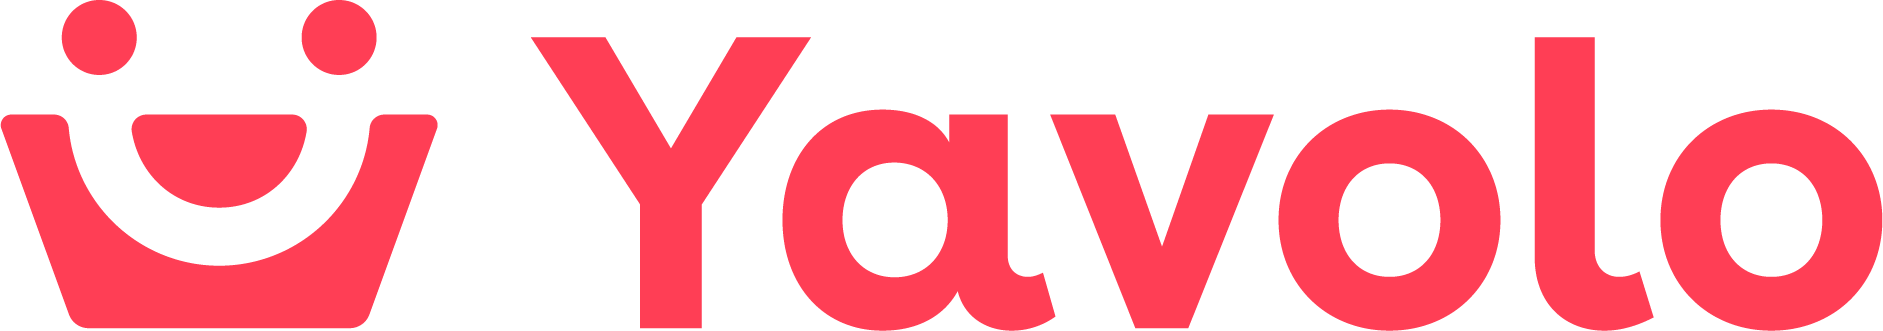 Yavolo Logo.